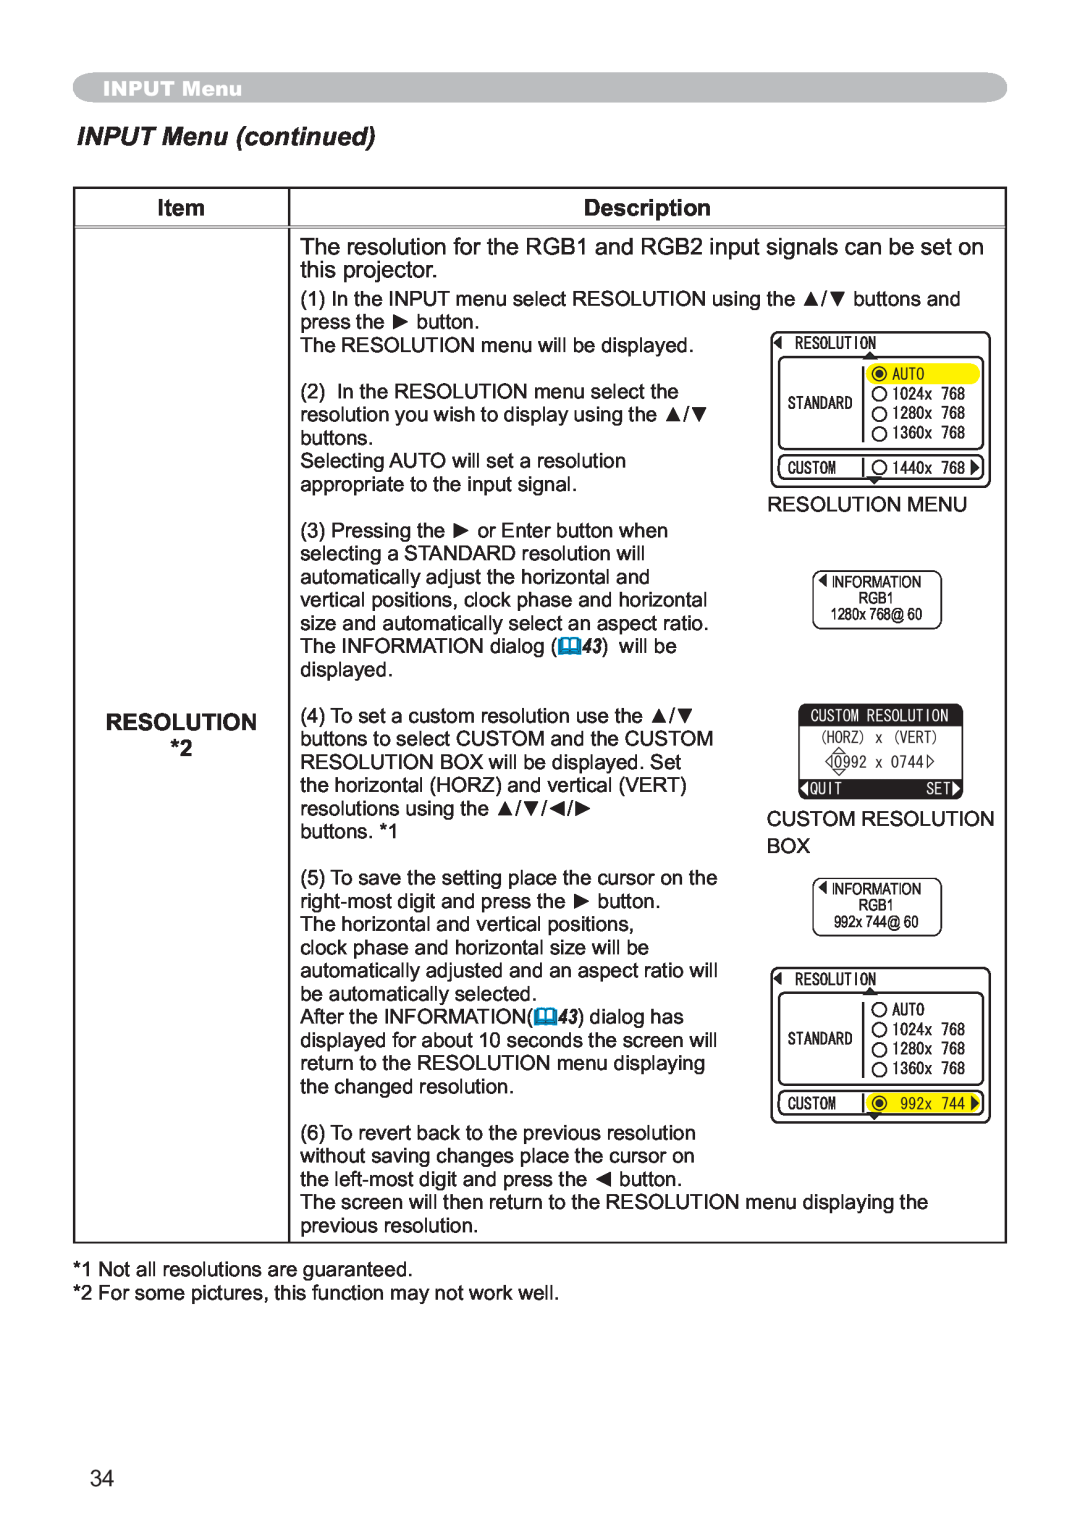 Hitachi ED-X12 user manual INPUT Menu continued, Item, Description, Resolution 